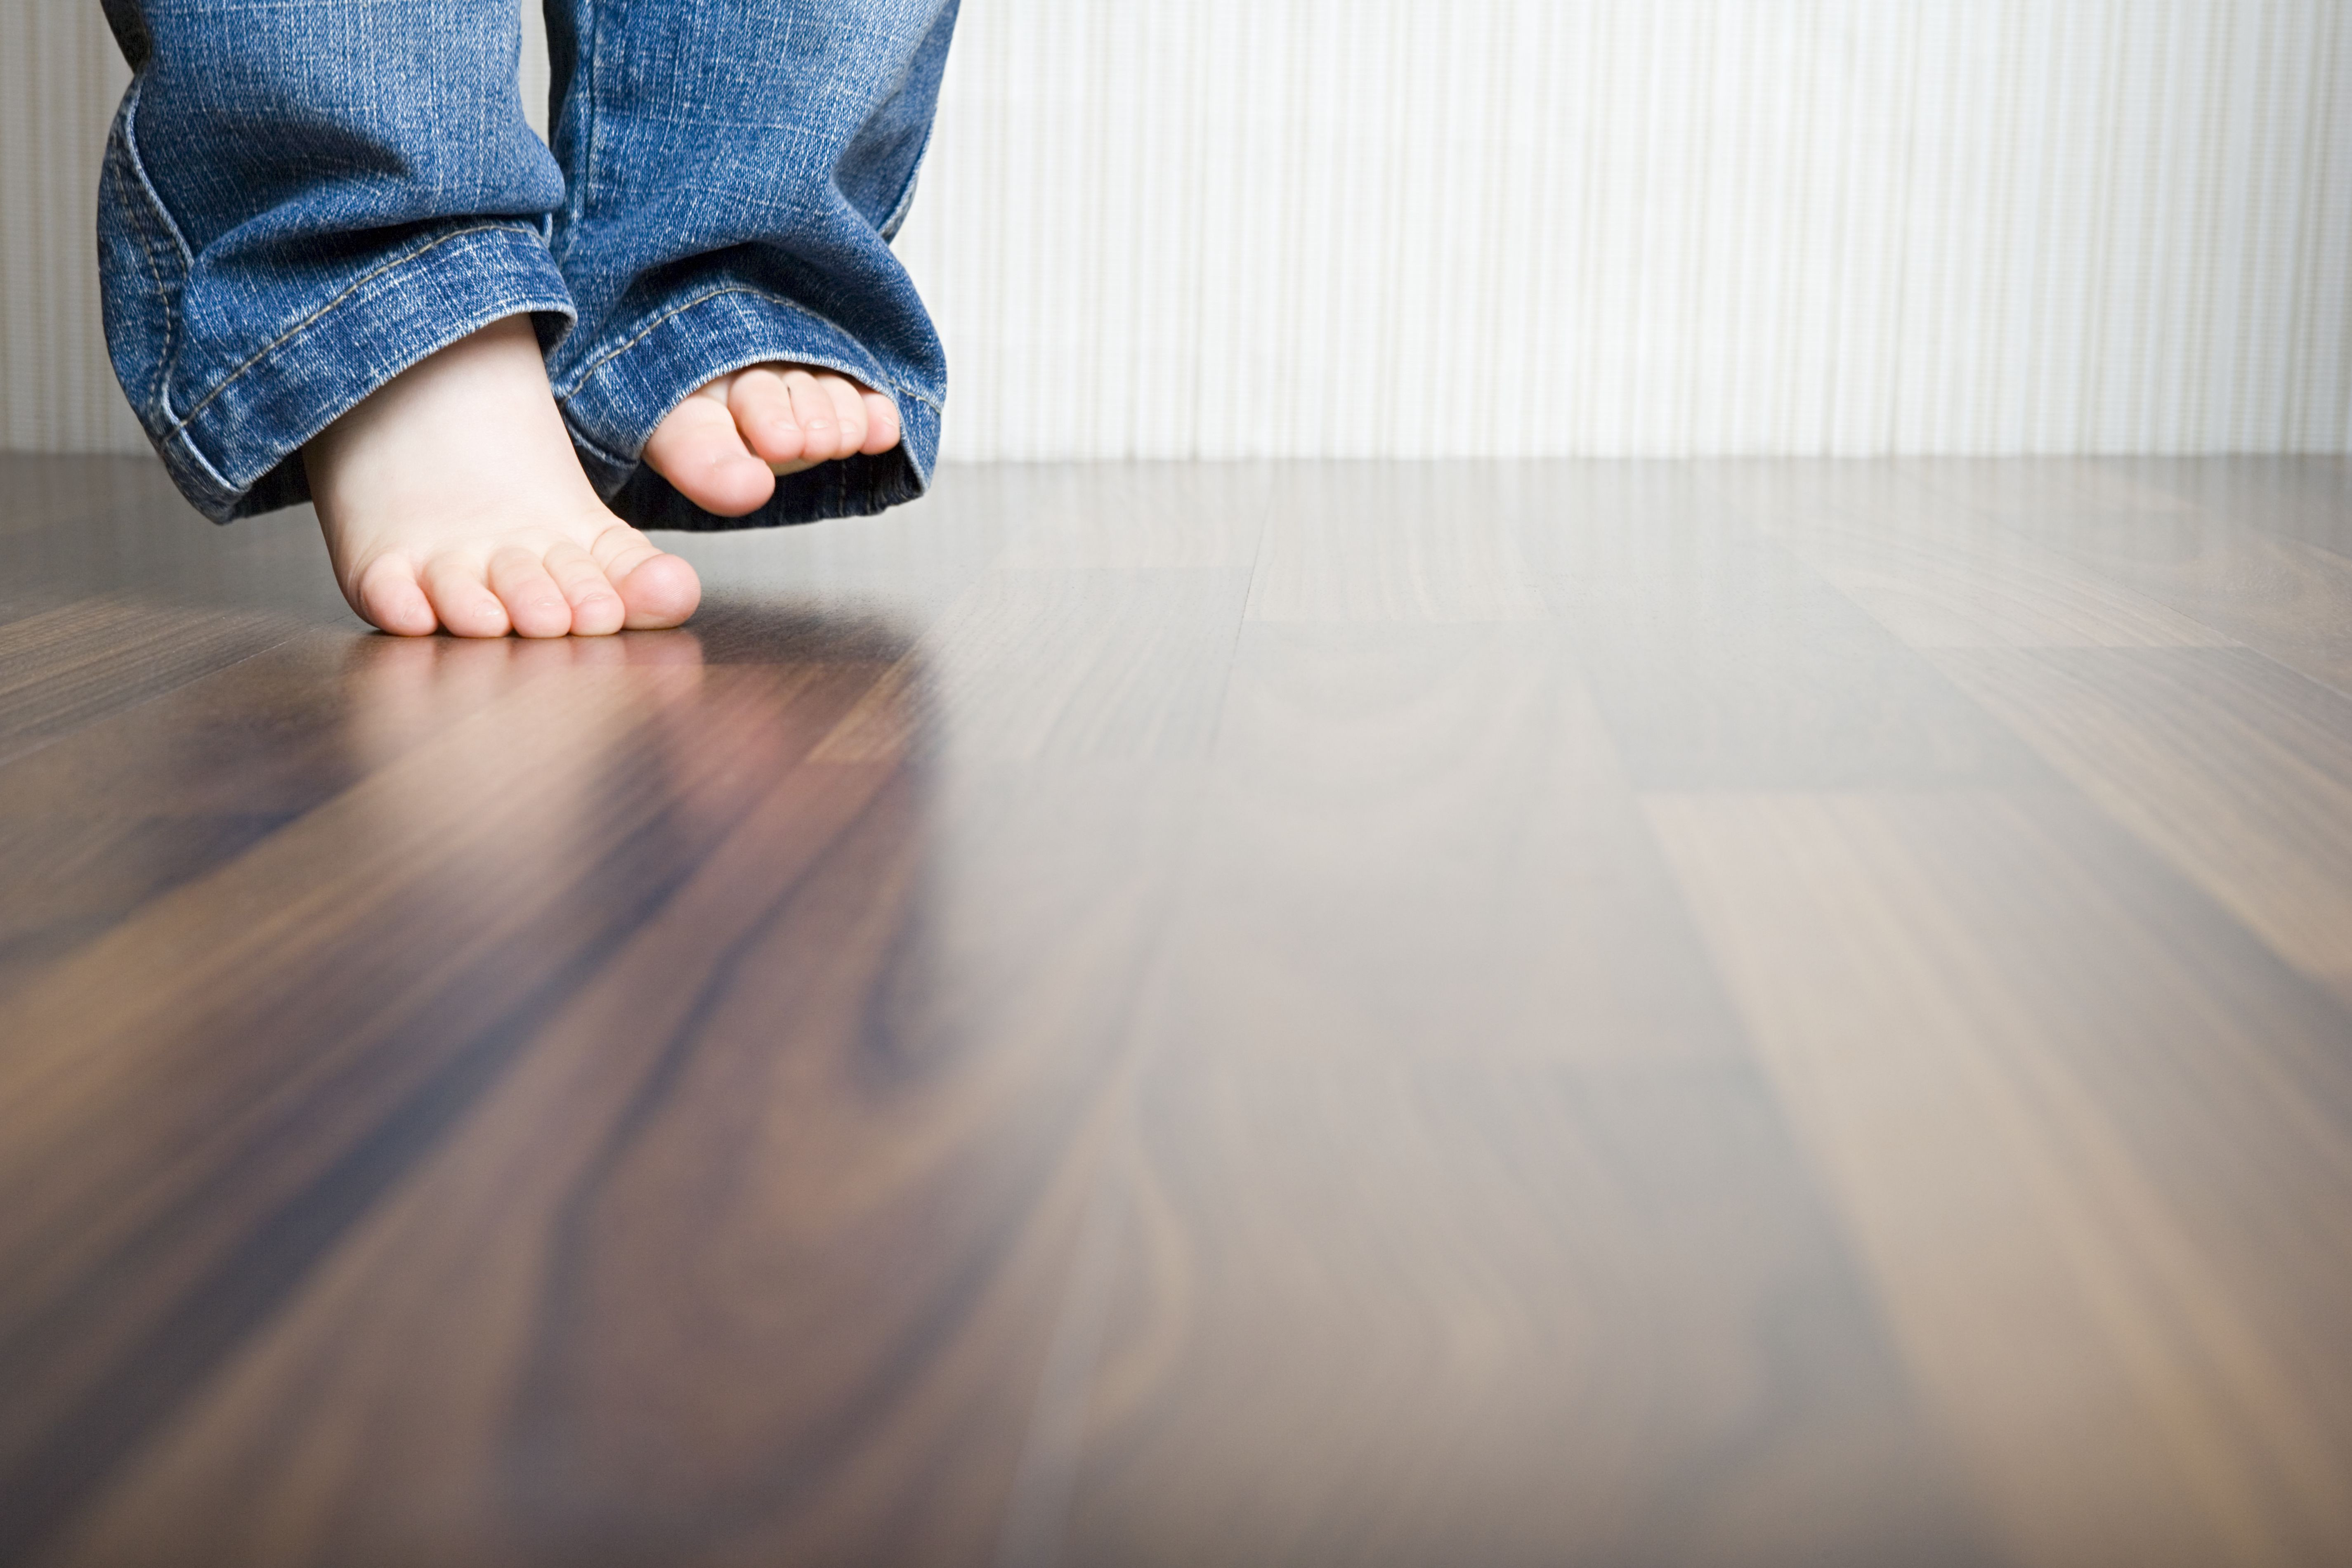 wingwood hand scraped hardwood flooring of how to clean hardwood floors best way to clean wood flooring in 1512149908 gettyimages 75403973